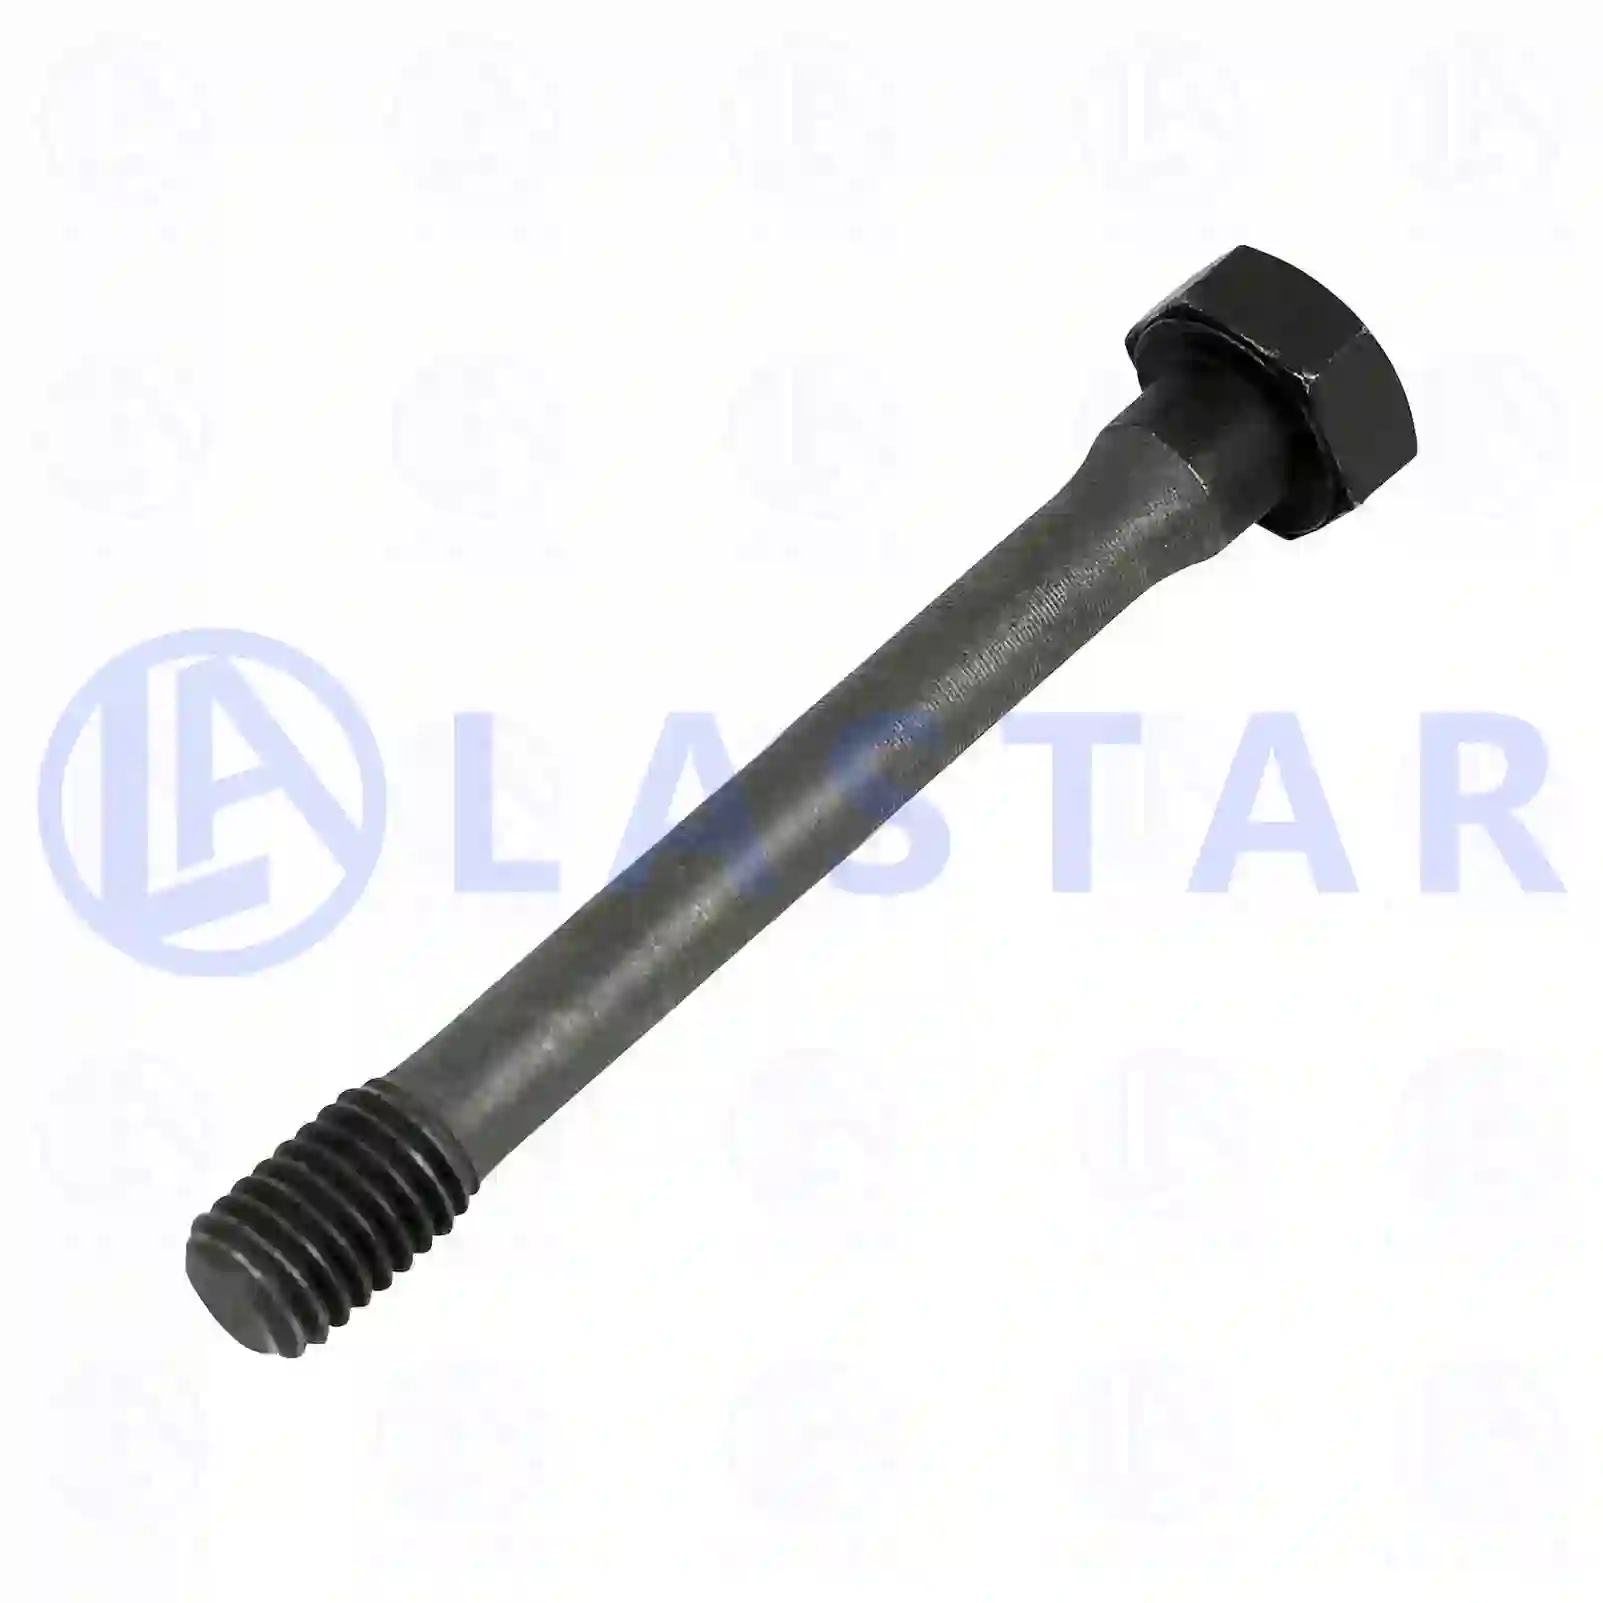  Cylinder Head Cylinder head screw, la no: 77701590 ,  oem no:3469900619 Lastar Spare Part | Truck Spare Parts, Auotomotive Spare Parts